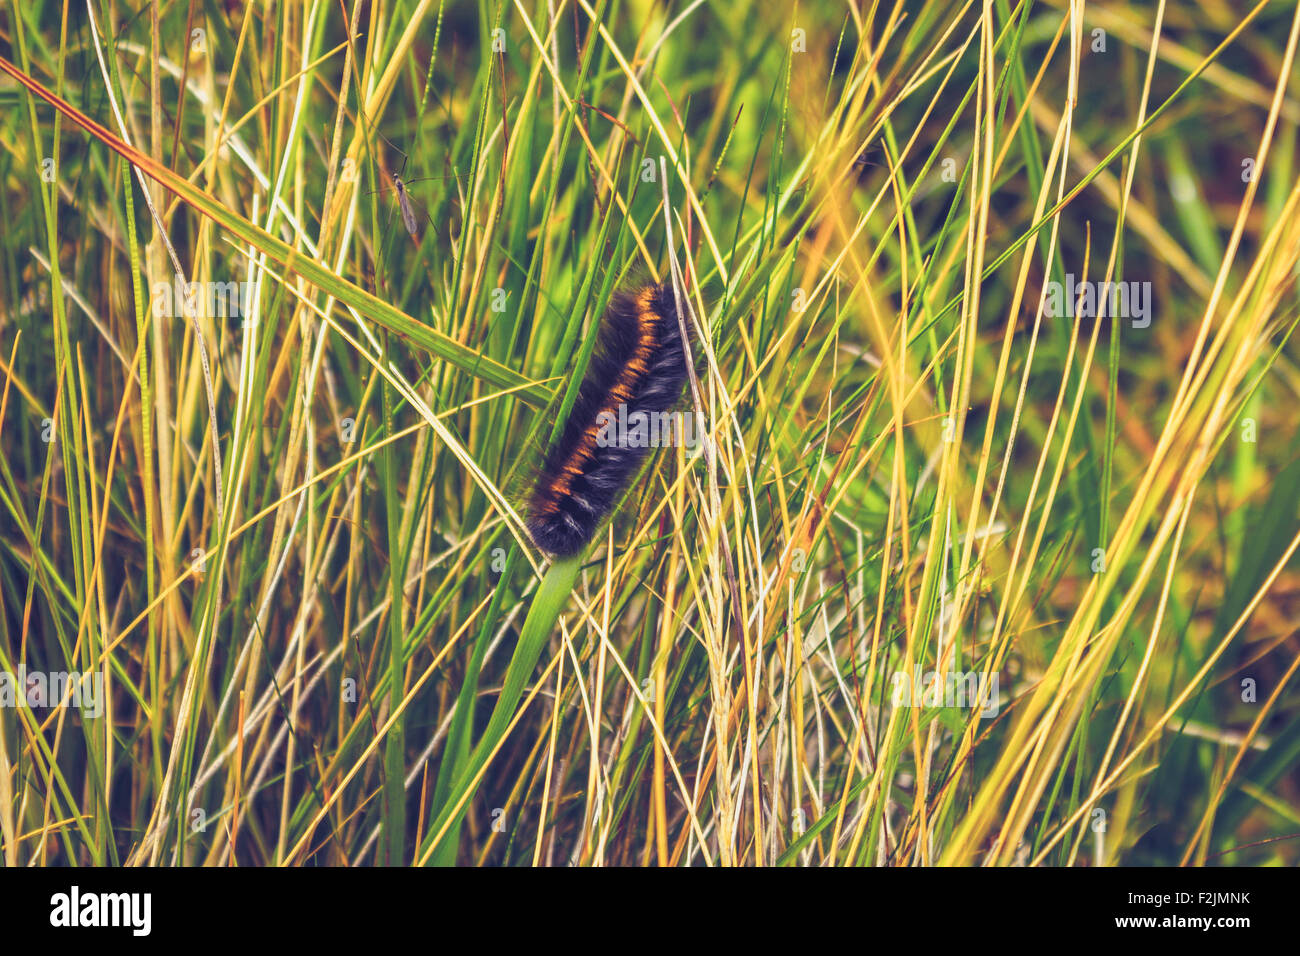 Big furry caterpillar creature in grass Stock Photo